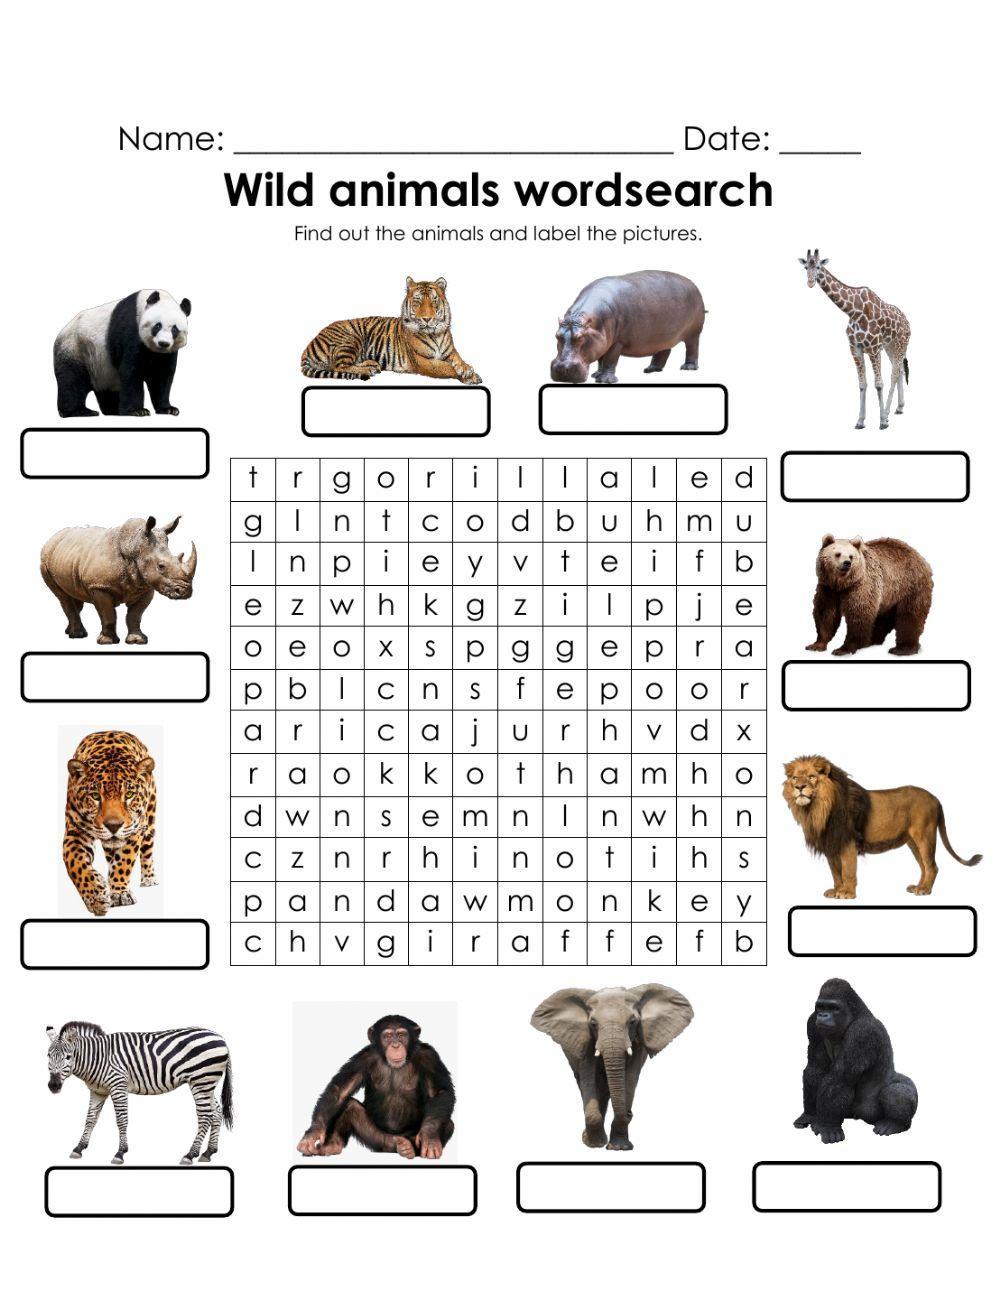 Wild animals wordsearch activity | Live Worksheets